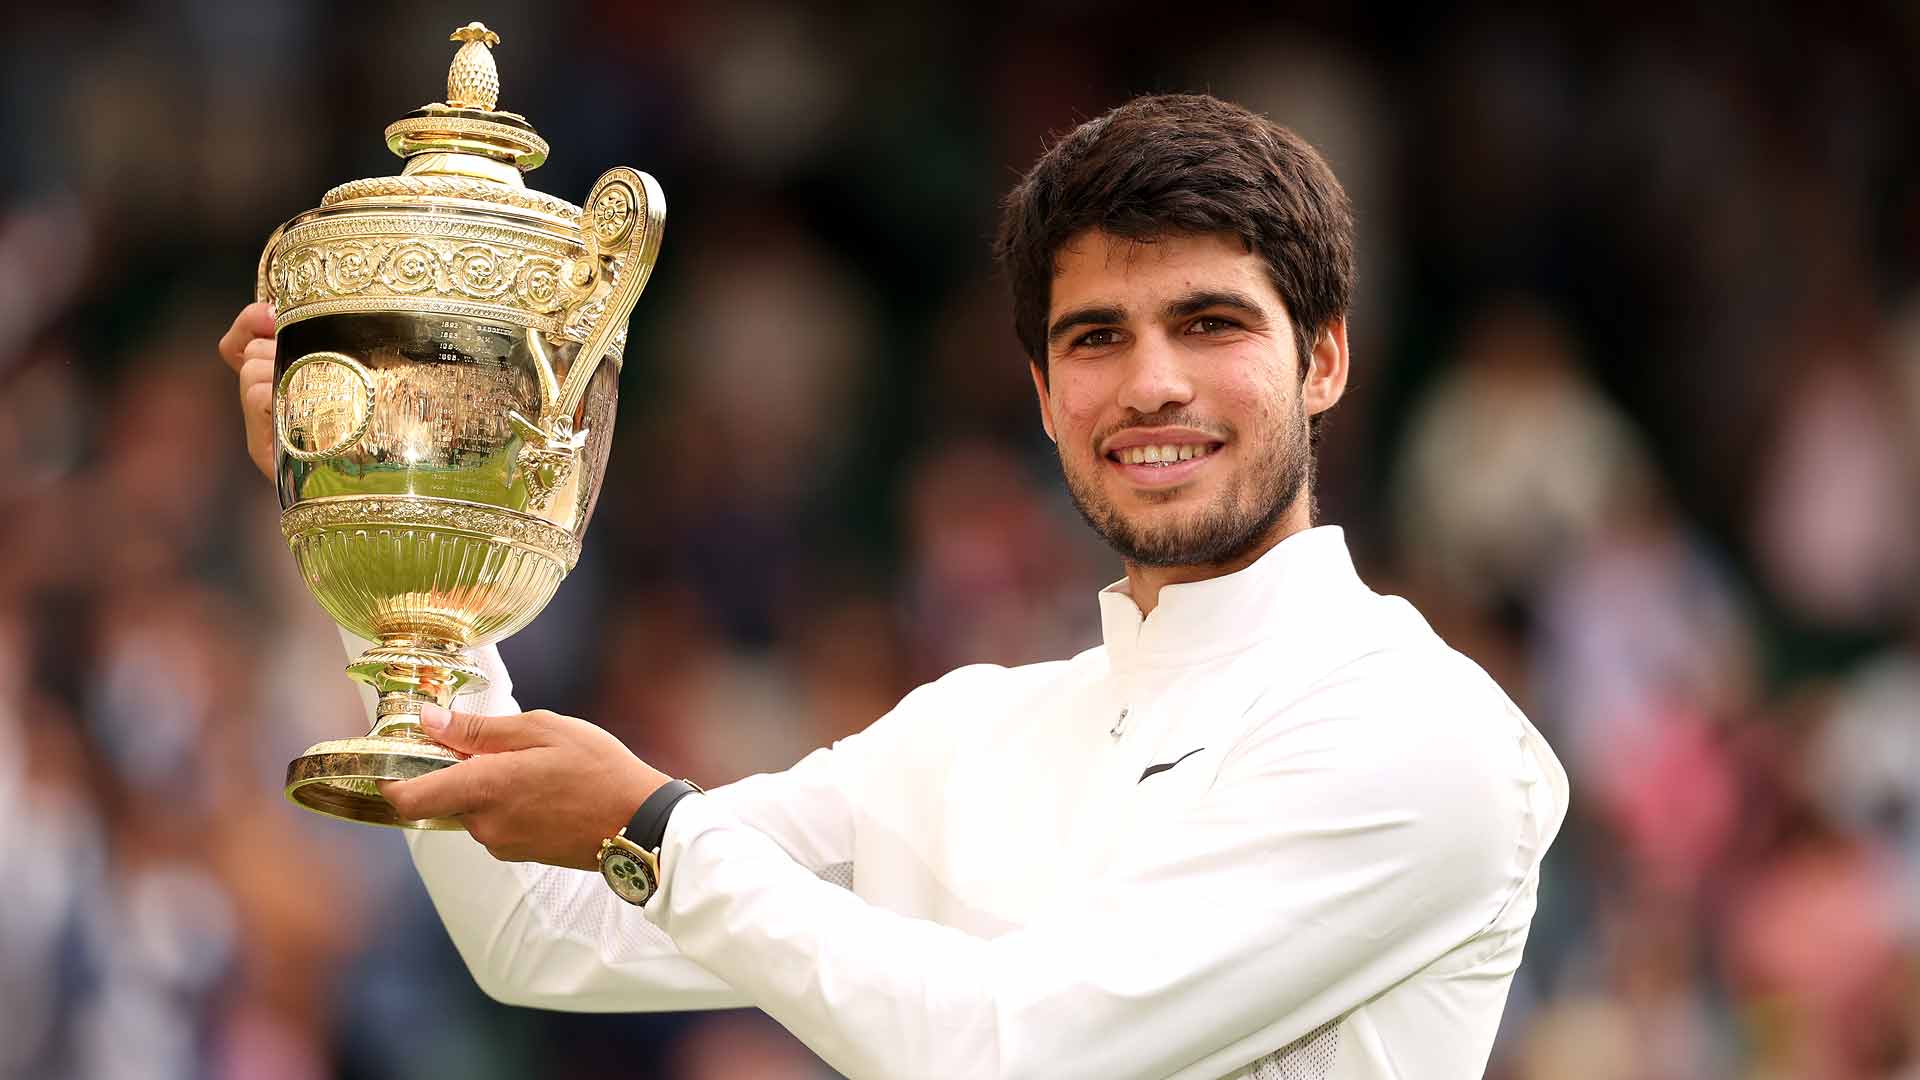 Alcaraz Wins Wimbledon in a Thrilling Comeback Against Djokovic